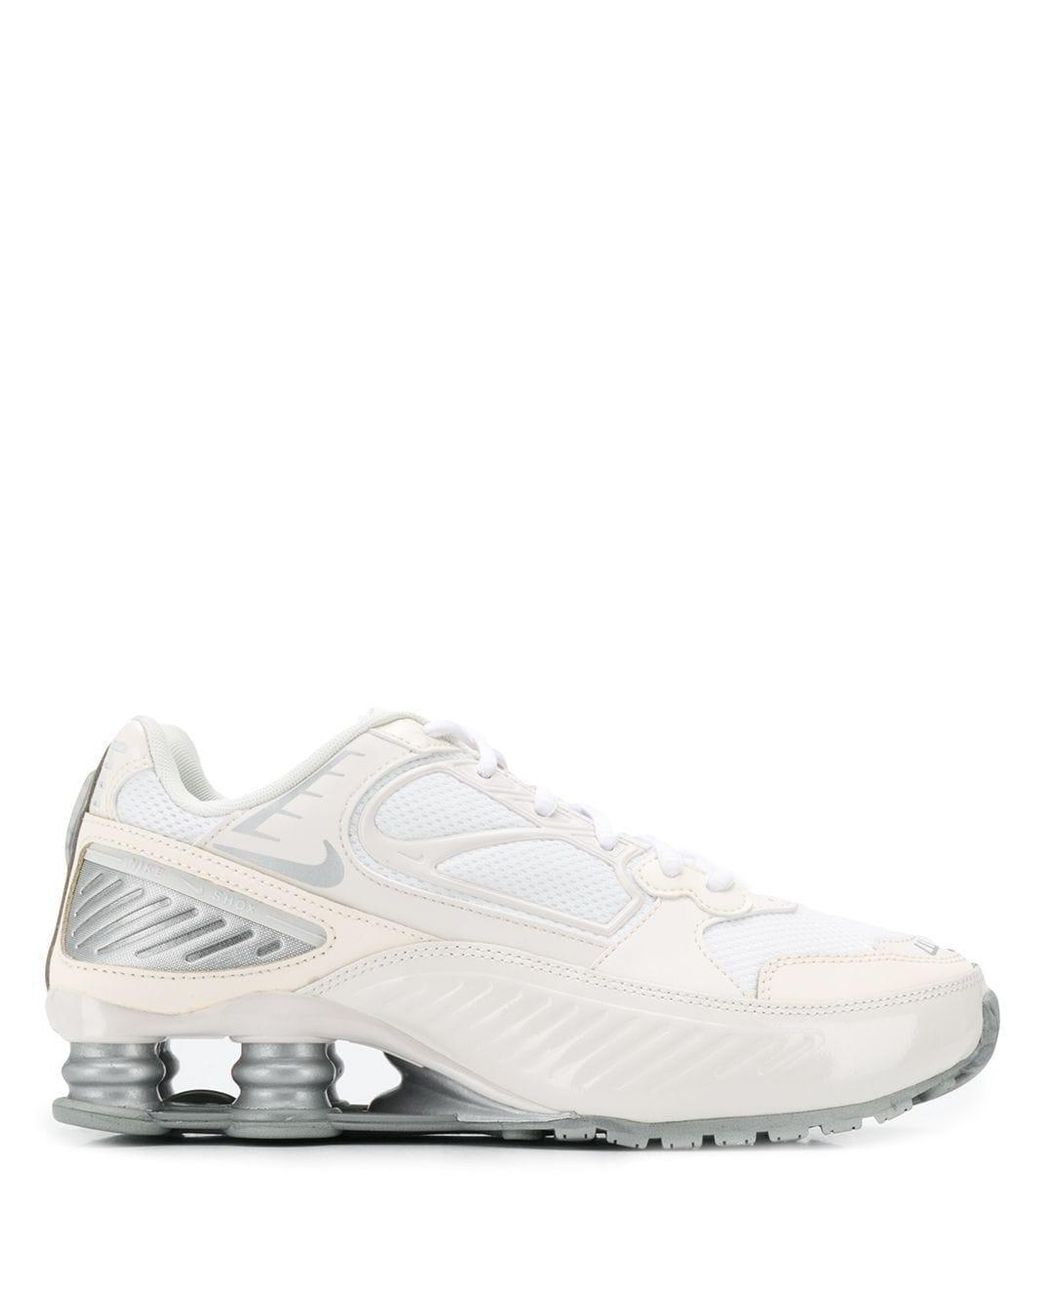 Nike Shox Enigma 9000 Sneakers in White Lyst